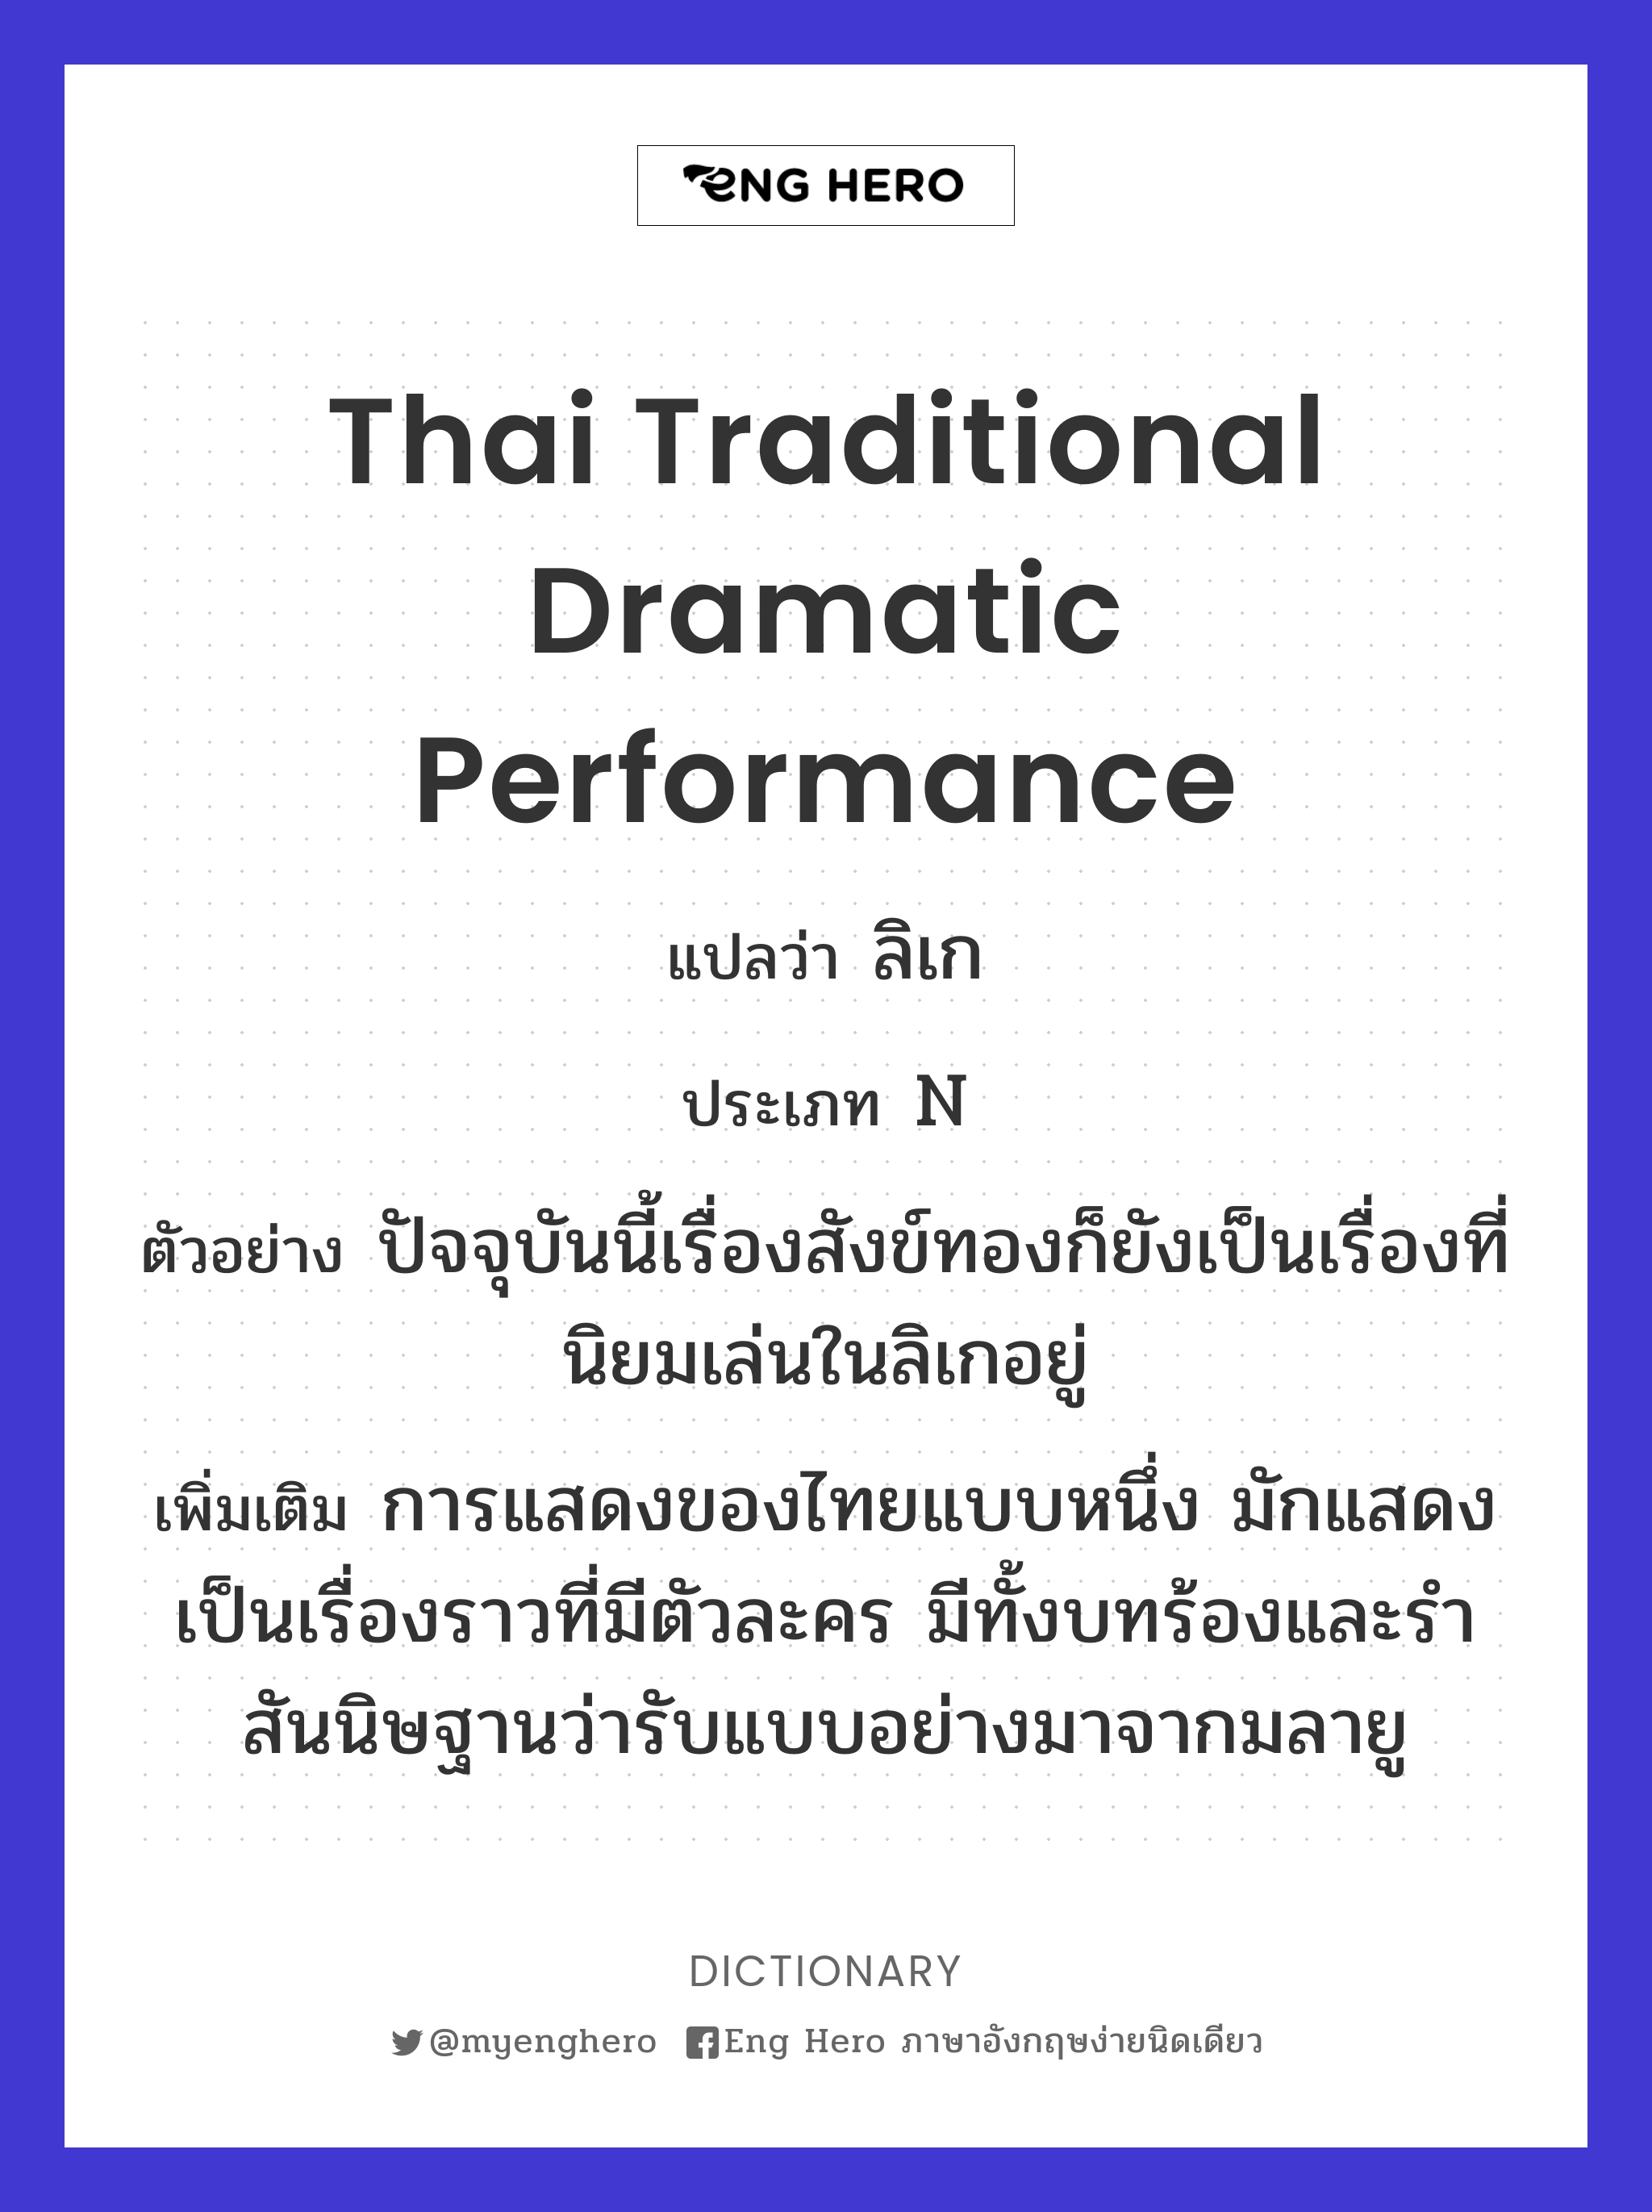 Thai traditional dramatic performance